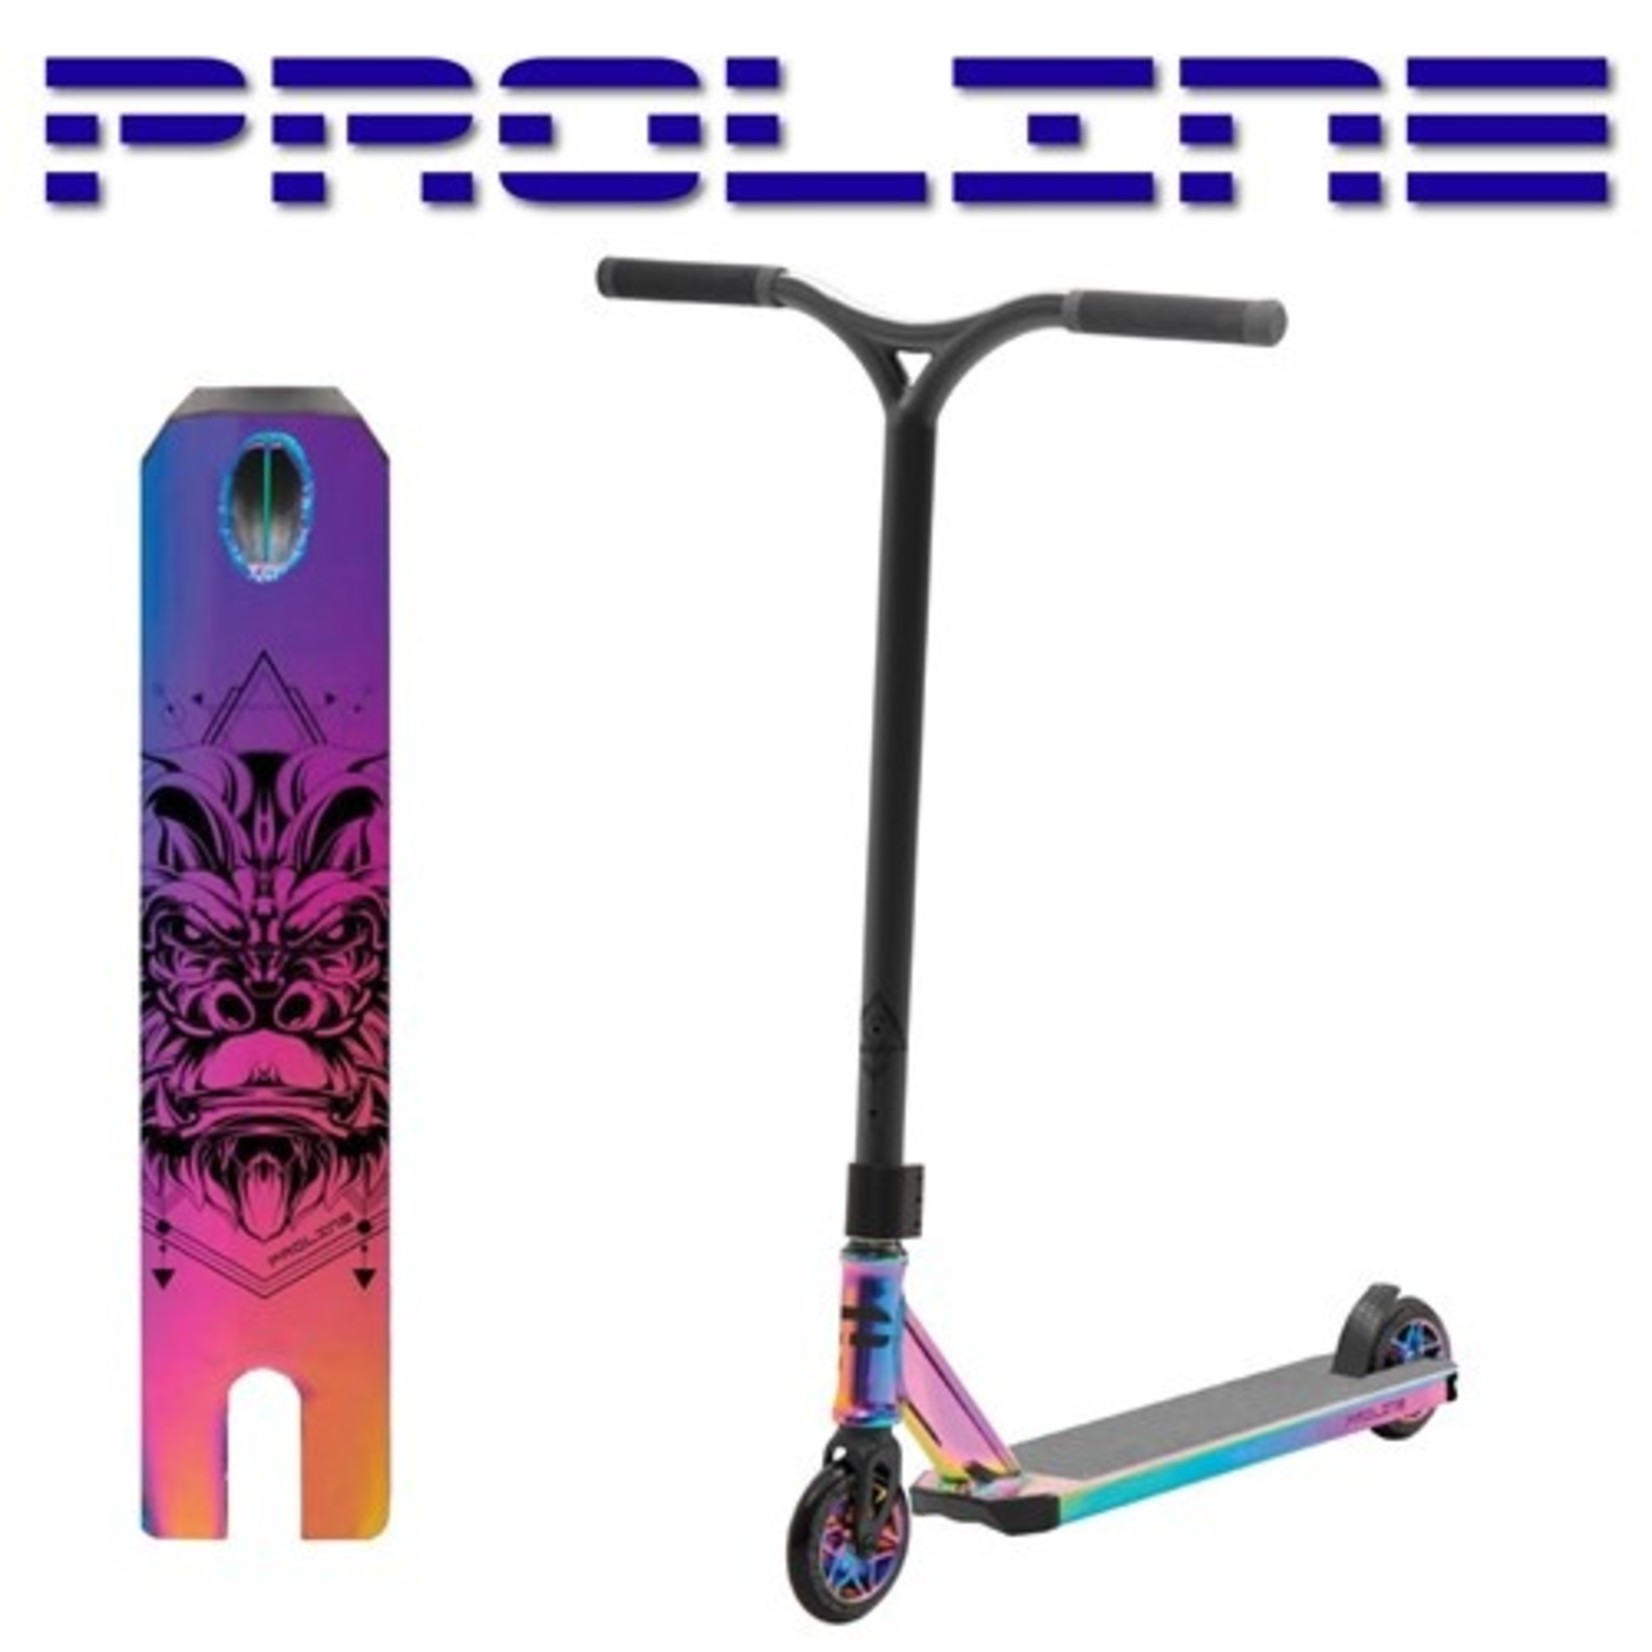 Proline Proline Scooter - L2 Neo Series - Chrome